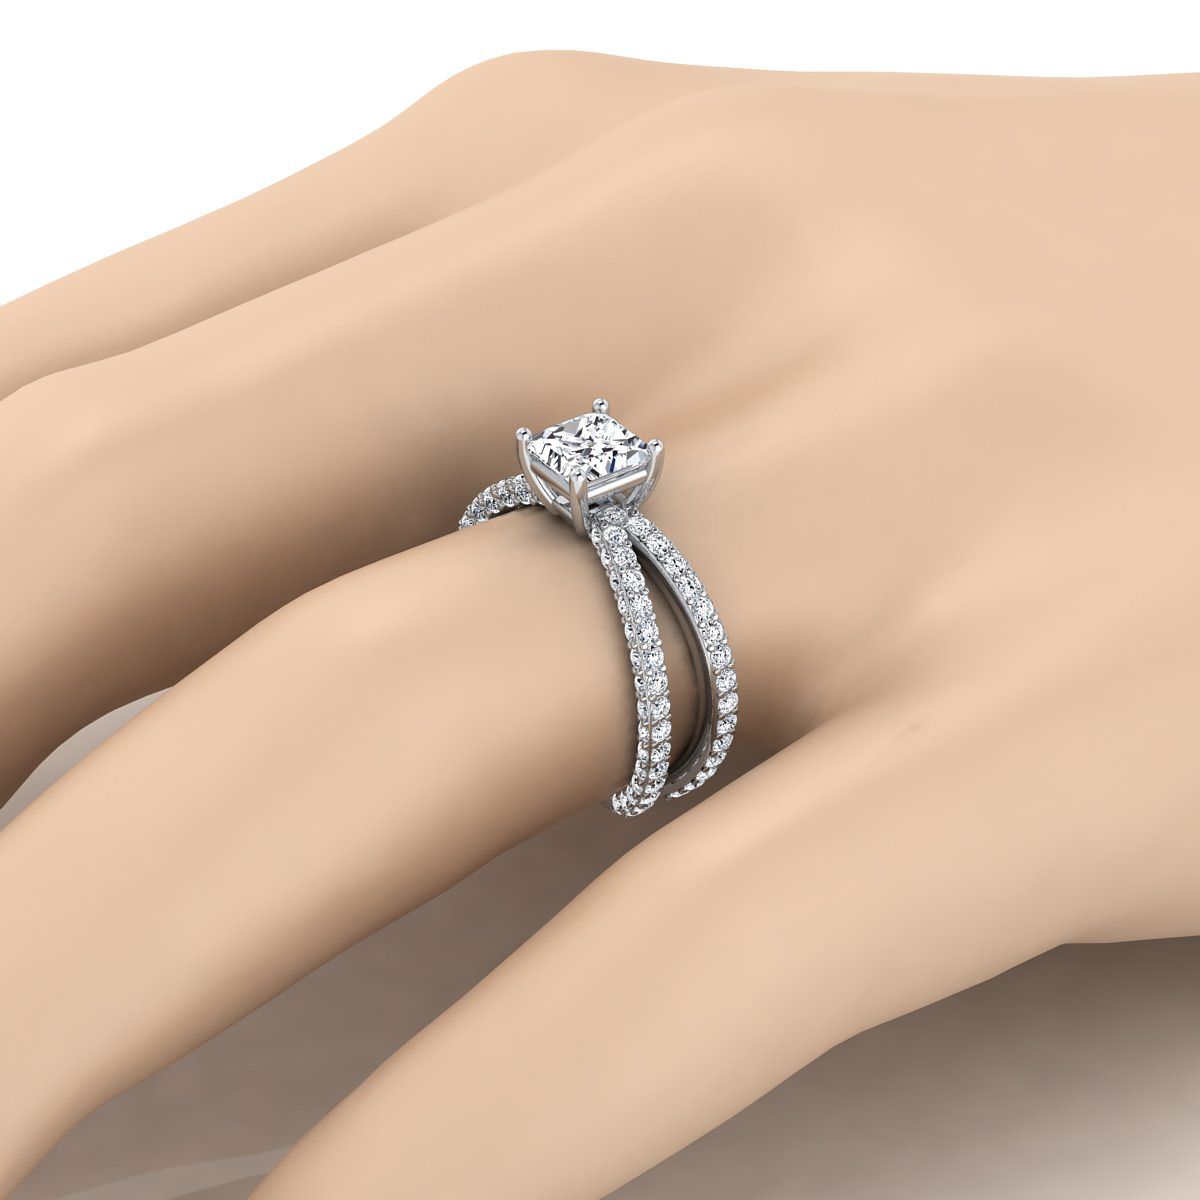 Platinum Princess Cut Open Diamond Pave Criss Cross Engagement Ring -1-1/3ctw